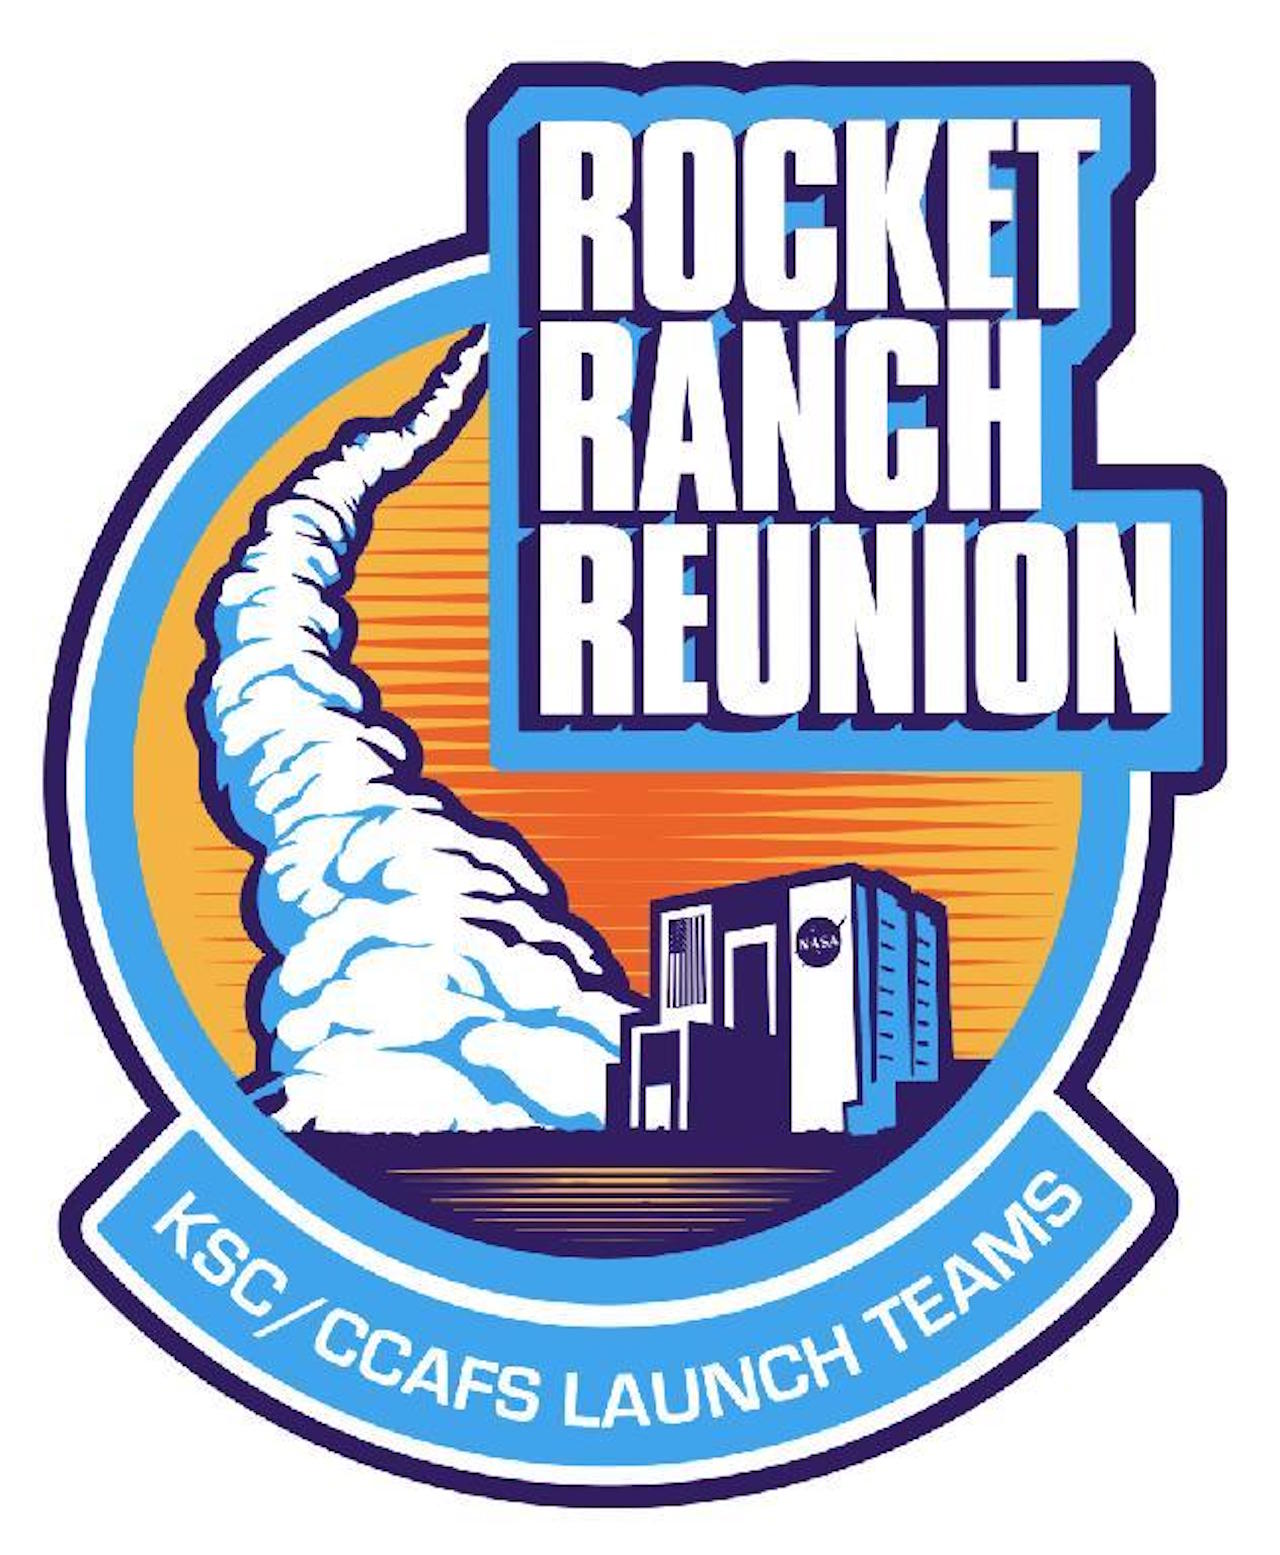 Rocket Ranch Reunion